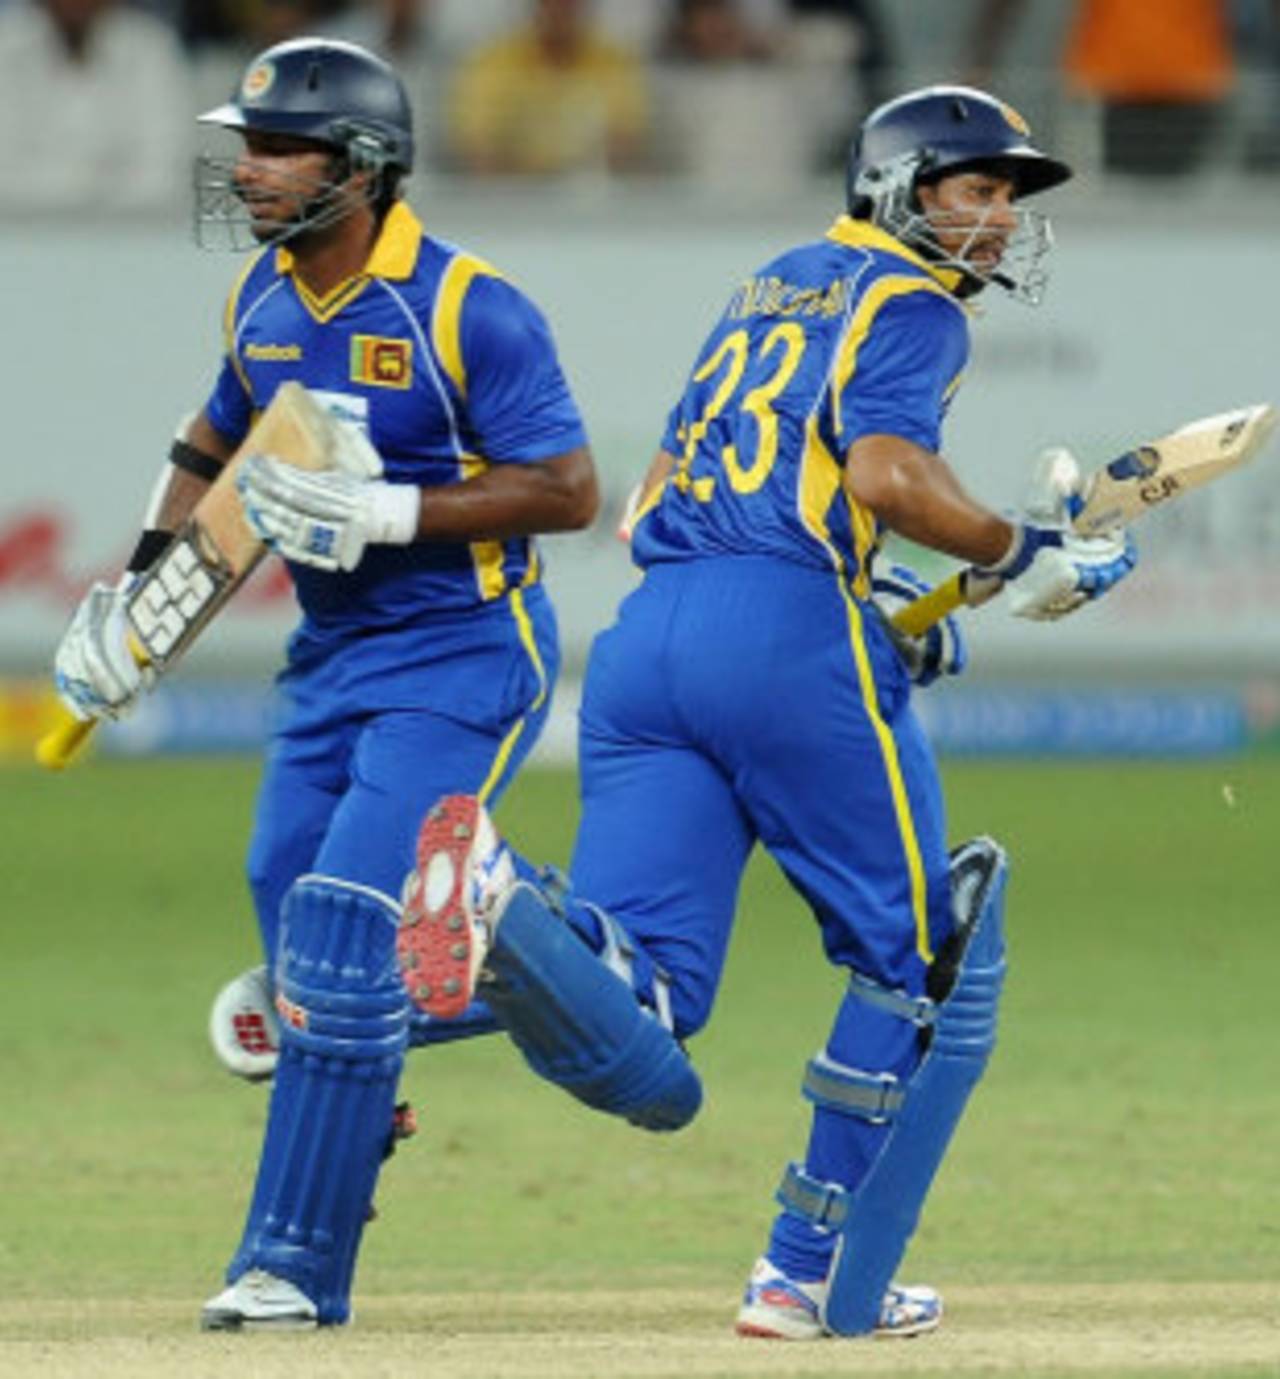 Tillakaratne Dilshan and Kumar Sangakkara gave Sri Lanka a bright start before the chase faded away&nbsp;&nbsp;&bull;&nbsp;&nbsp;AFP